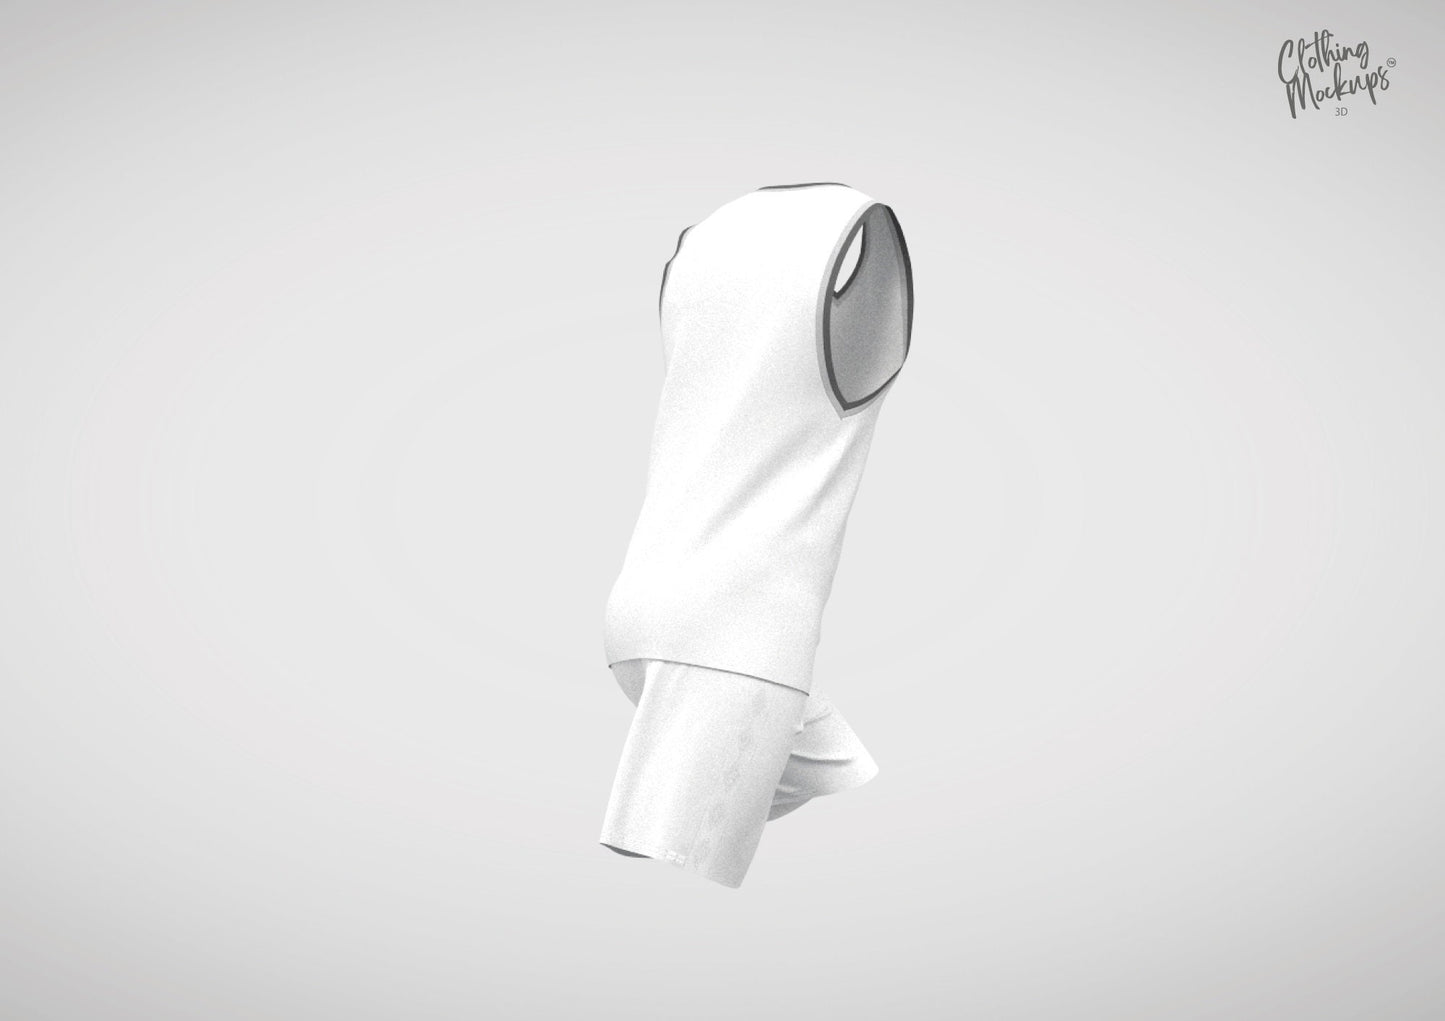 Procreate 3D Basketball kit obj shorts & jersey Blend file for Blender included